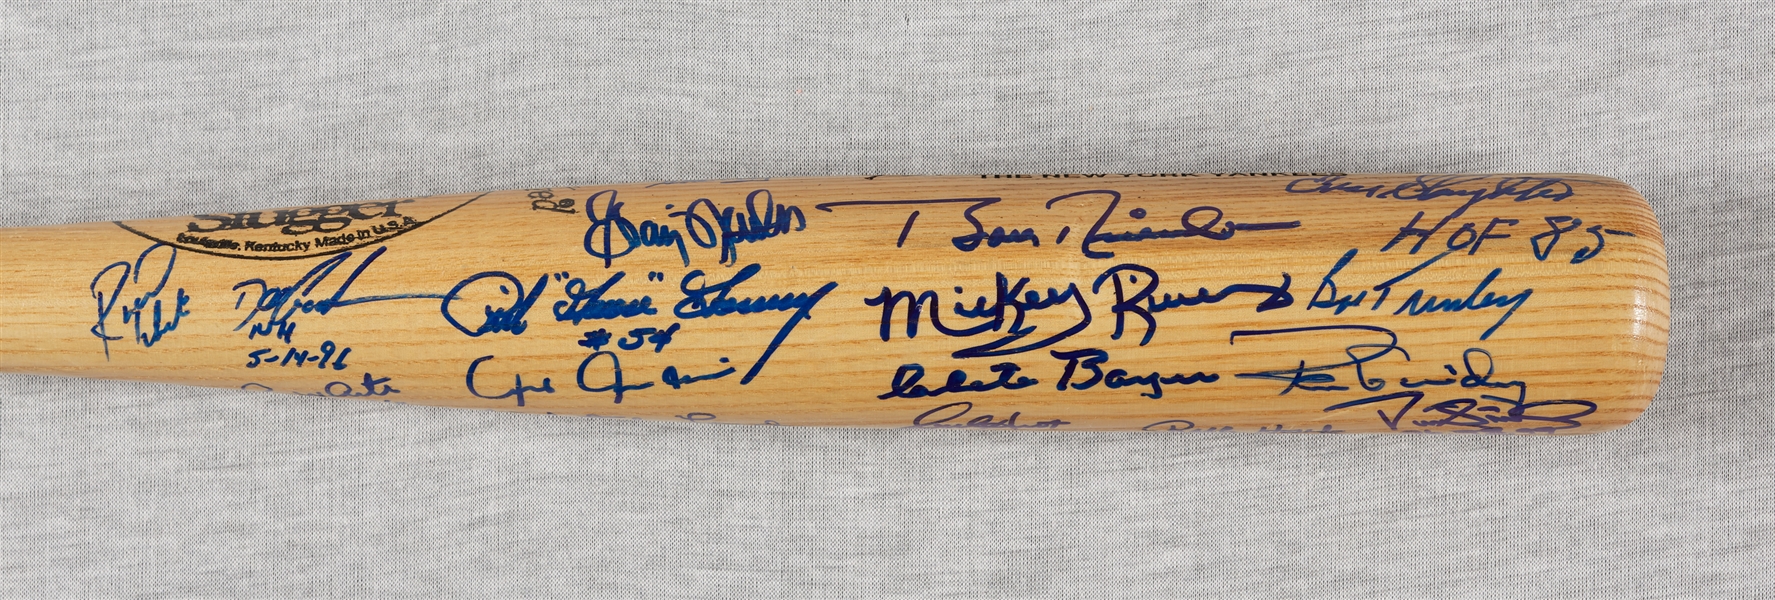 New York Yankees Multi-Signed Bat (28 Signatures) (PSA/DNA)